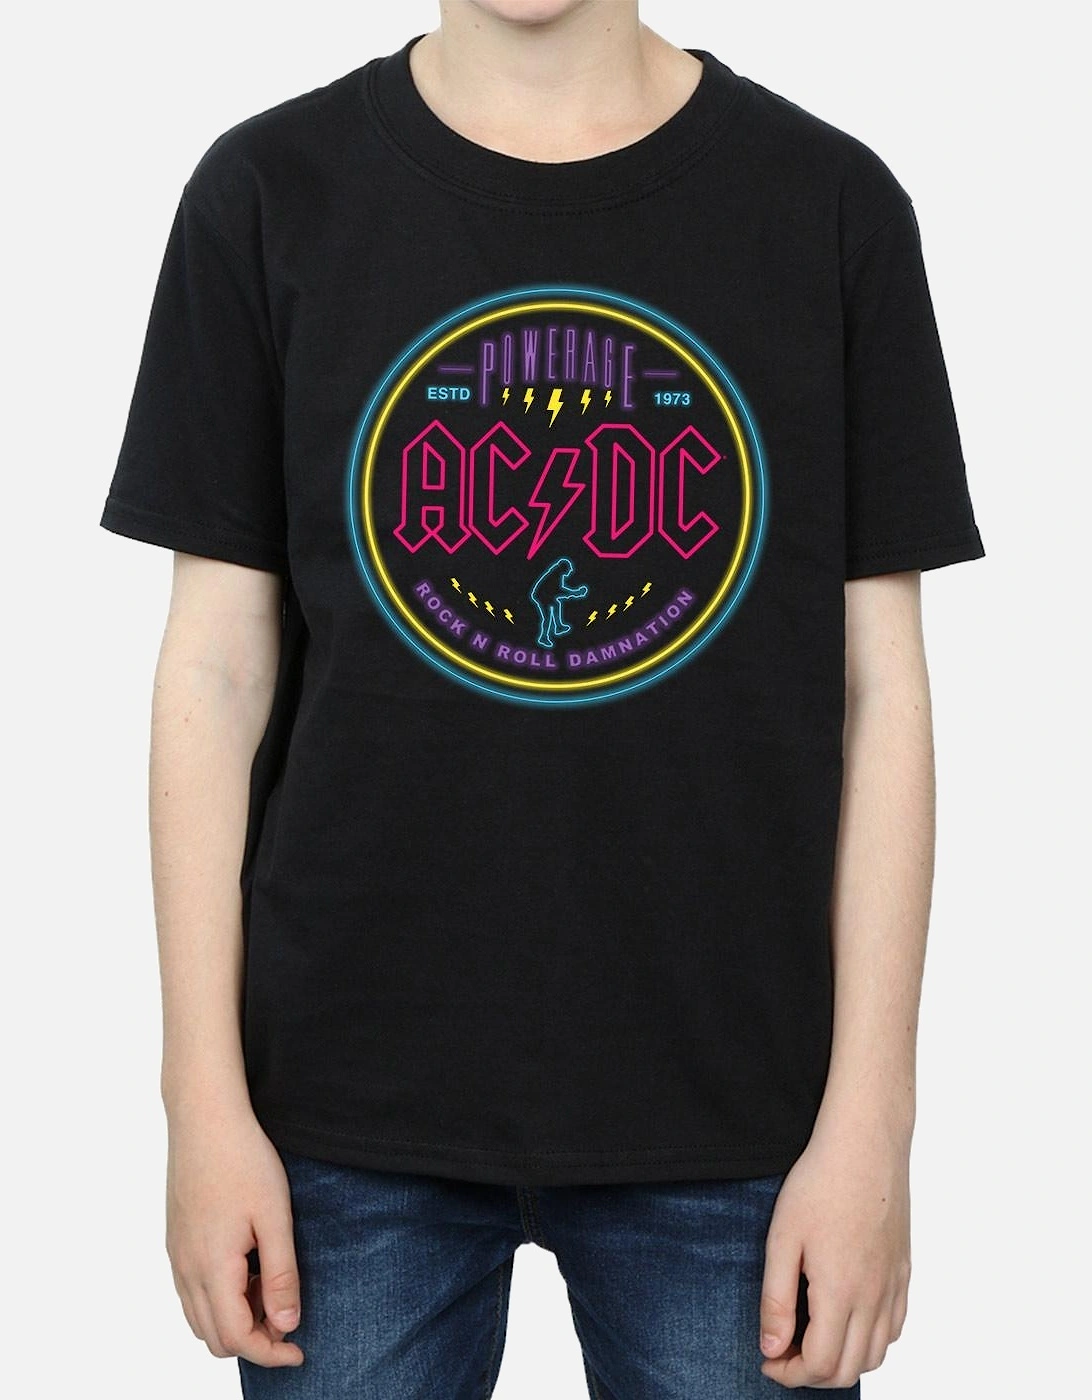 Boys Circle Neon T-Shirt